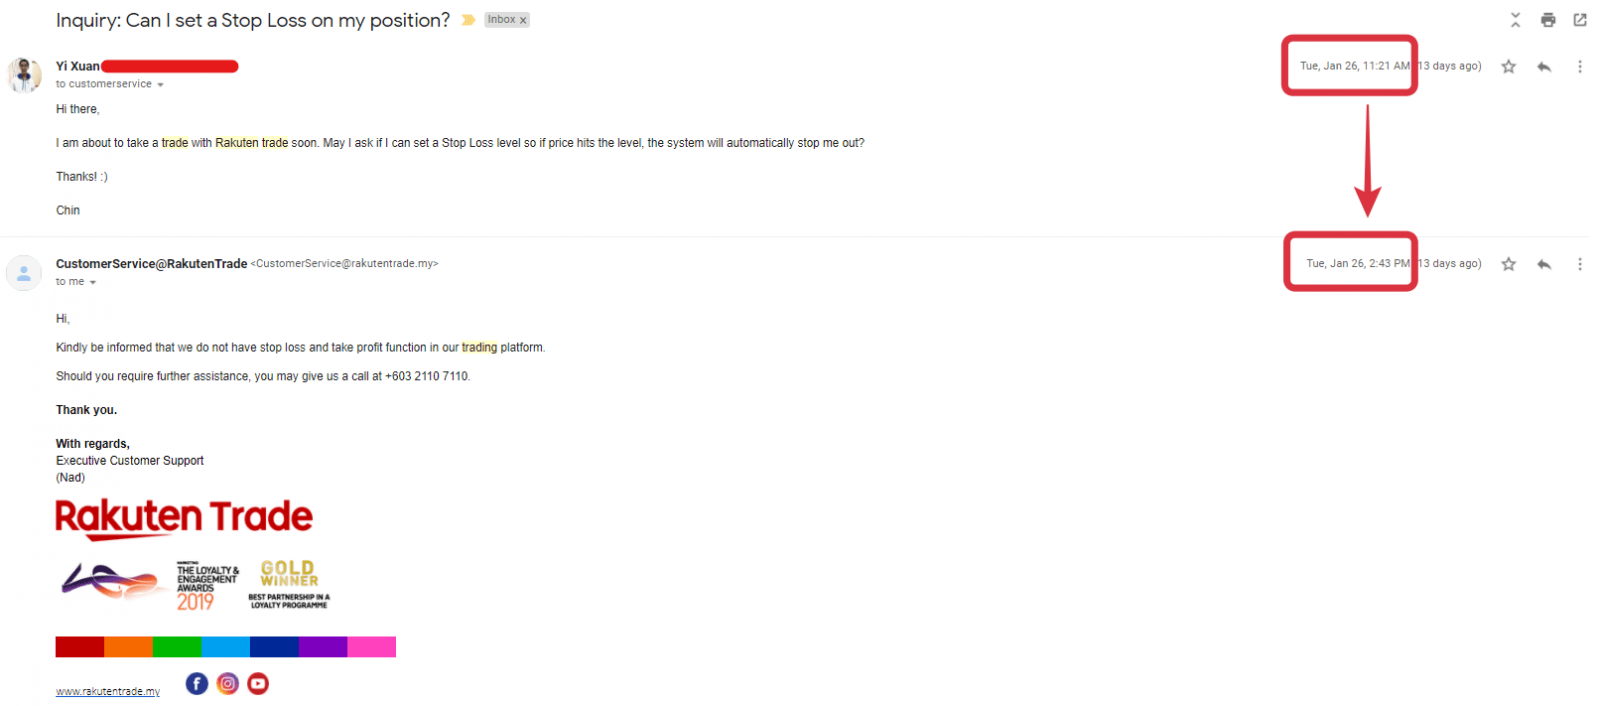 Just me randomly testing Rakuten Trade's customer service. The response has been quick.